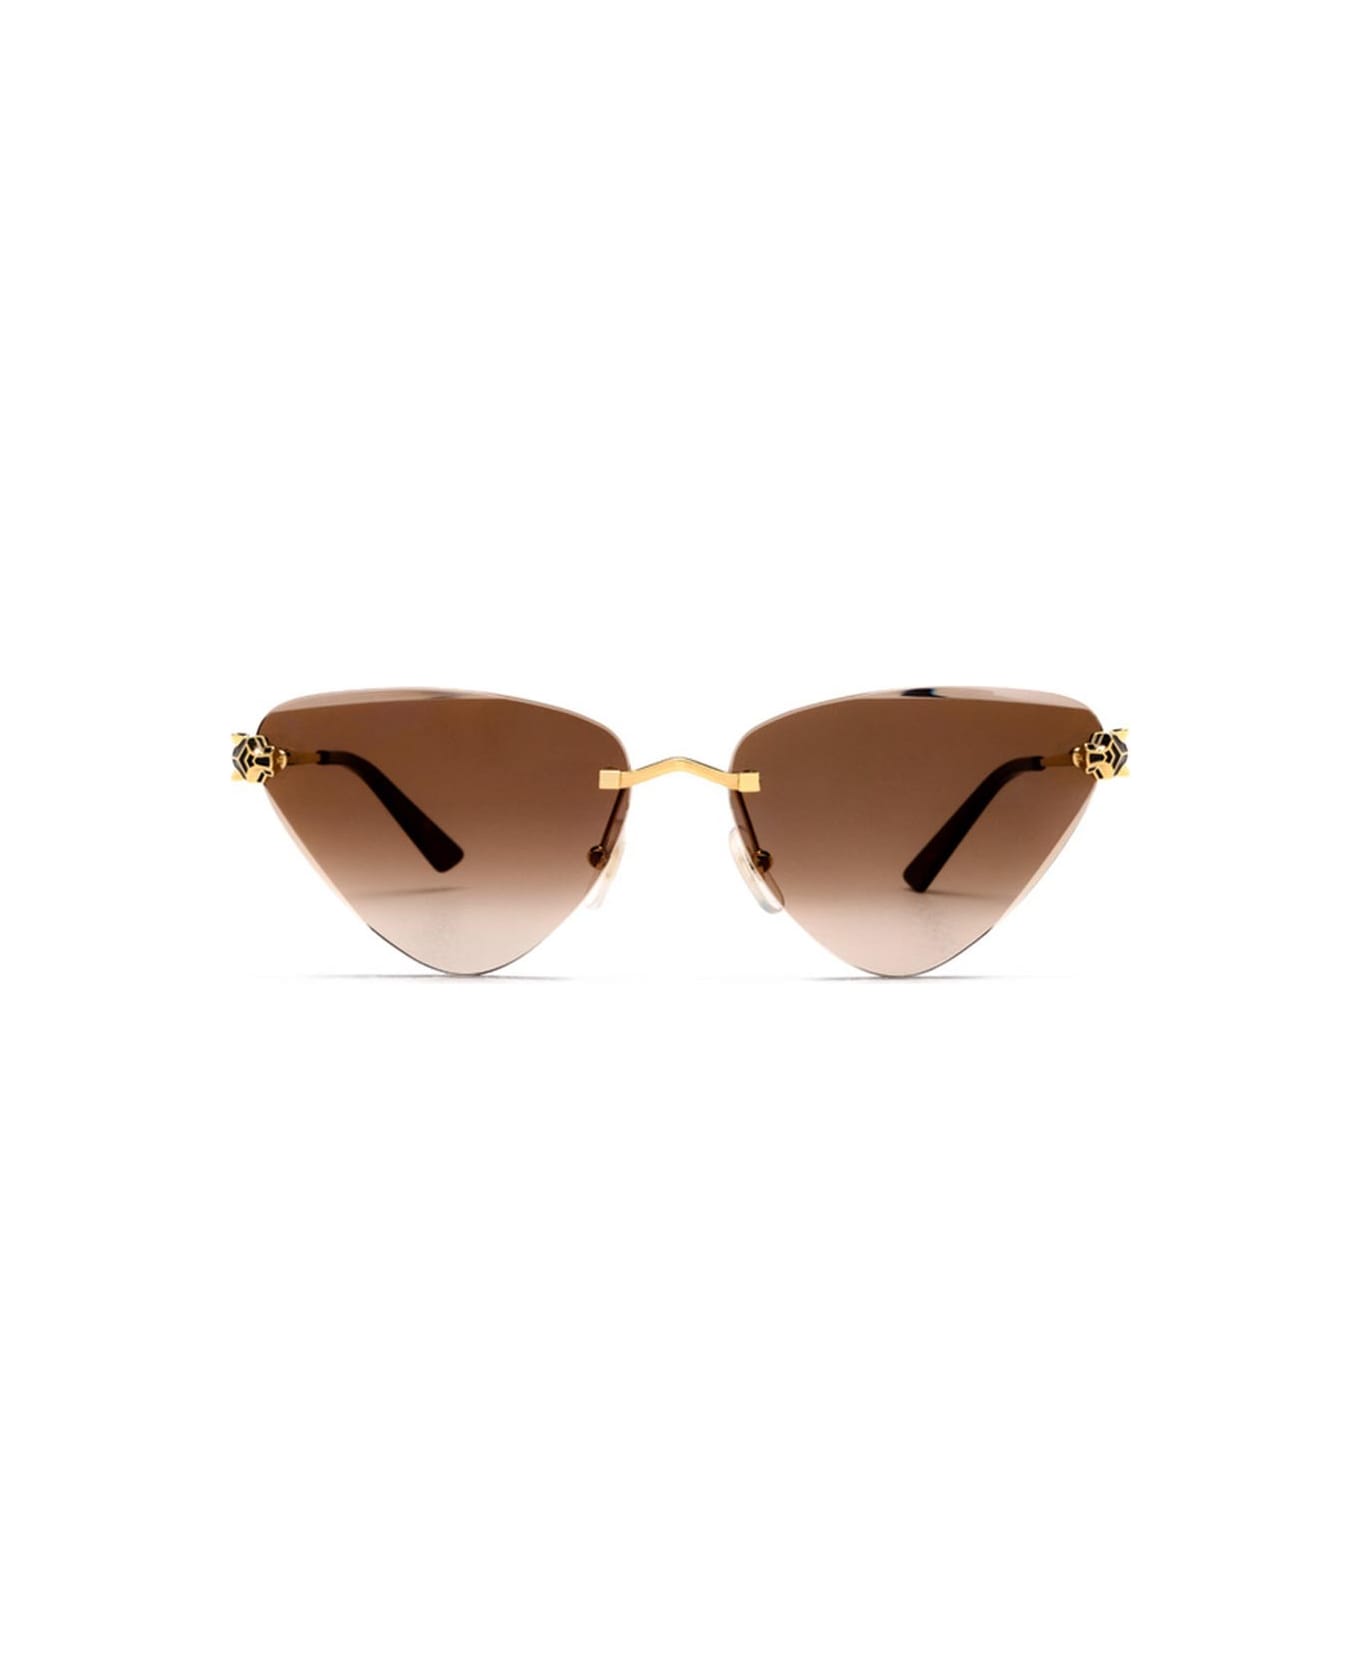 Cartier Eyewear Sunglasses - Oro/Marrone